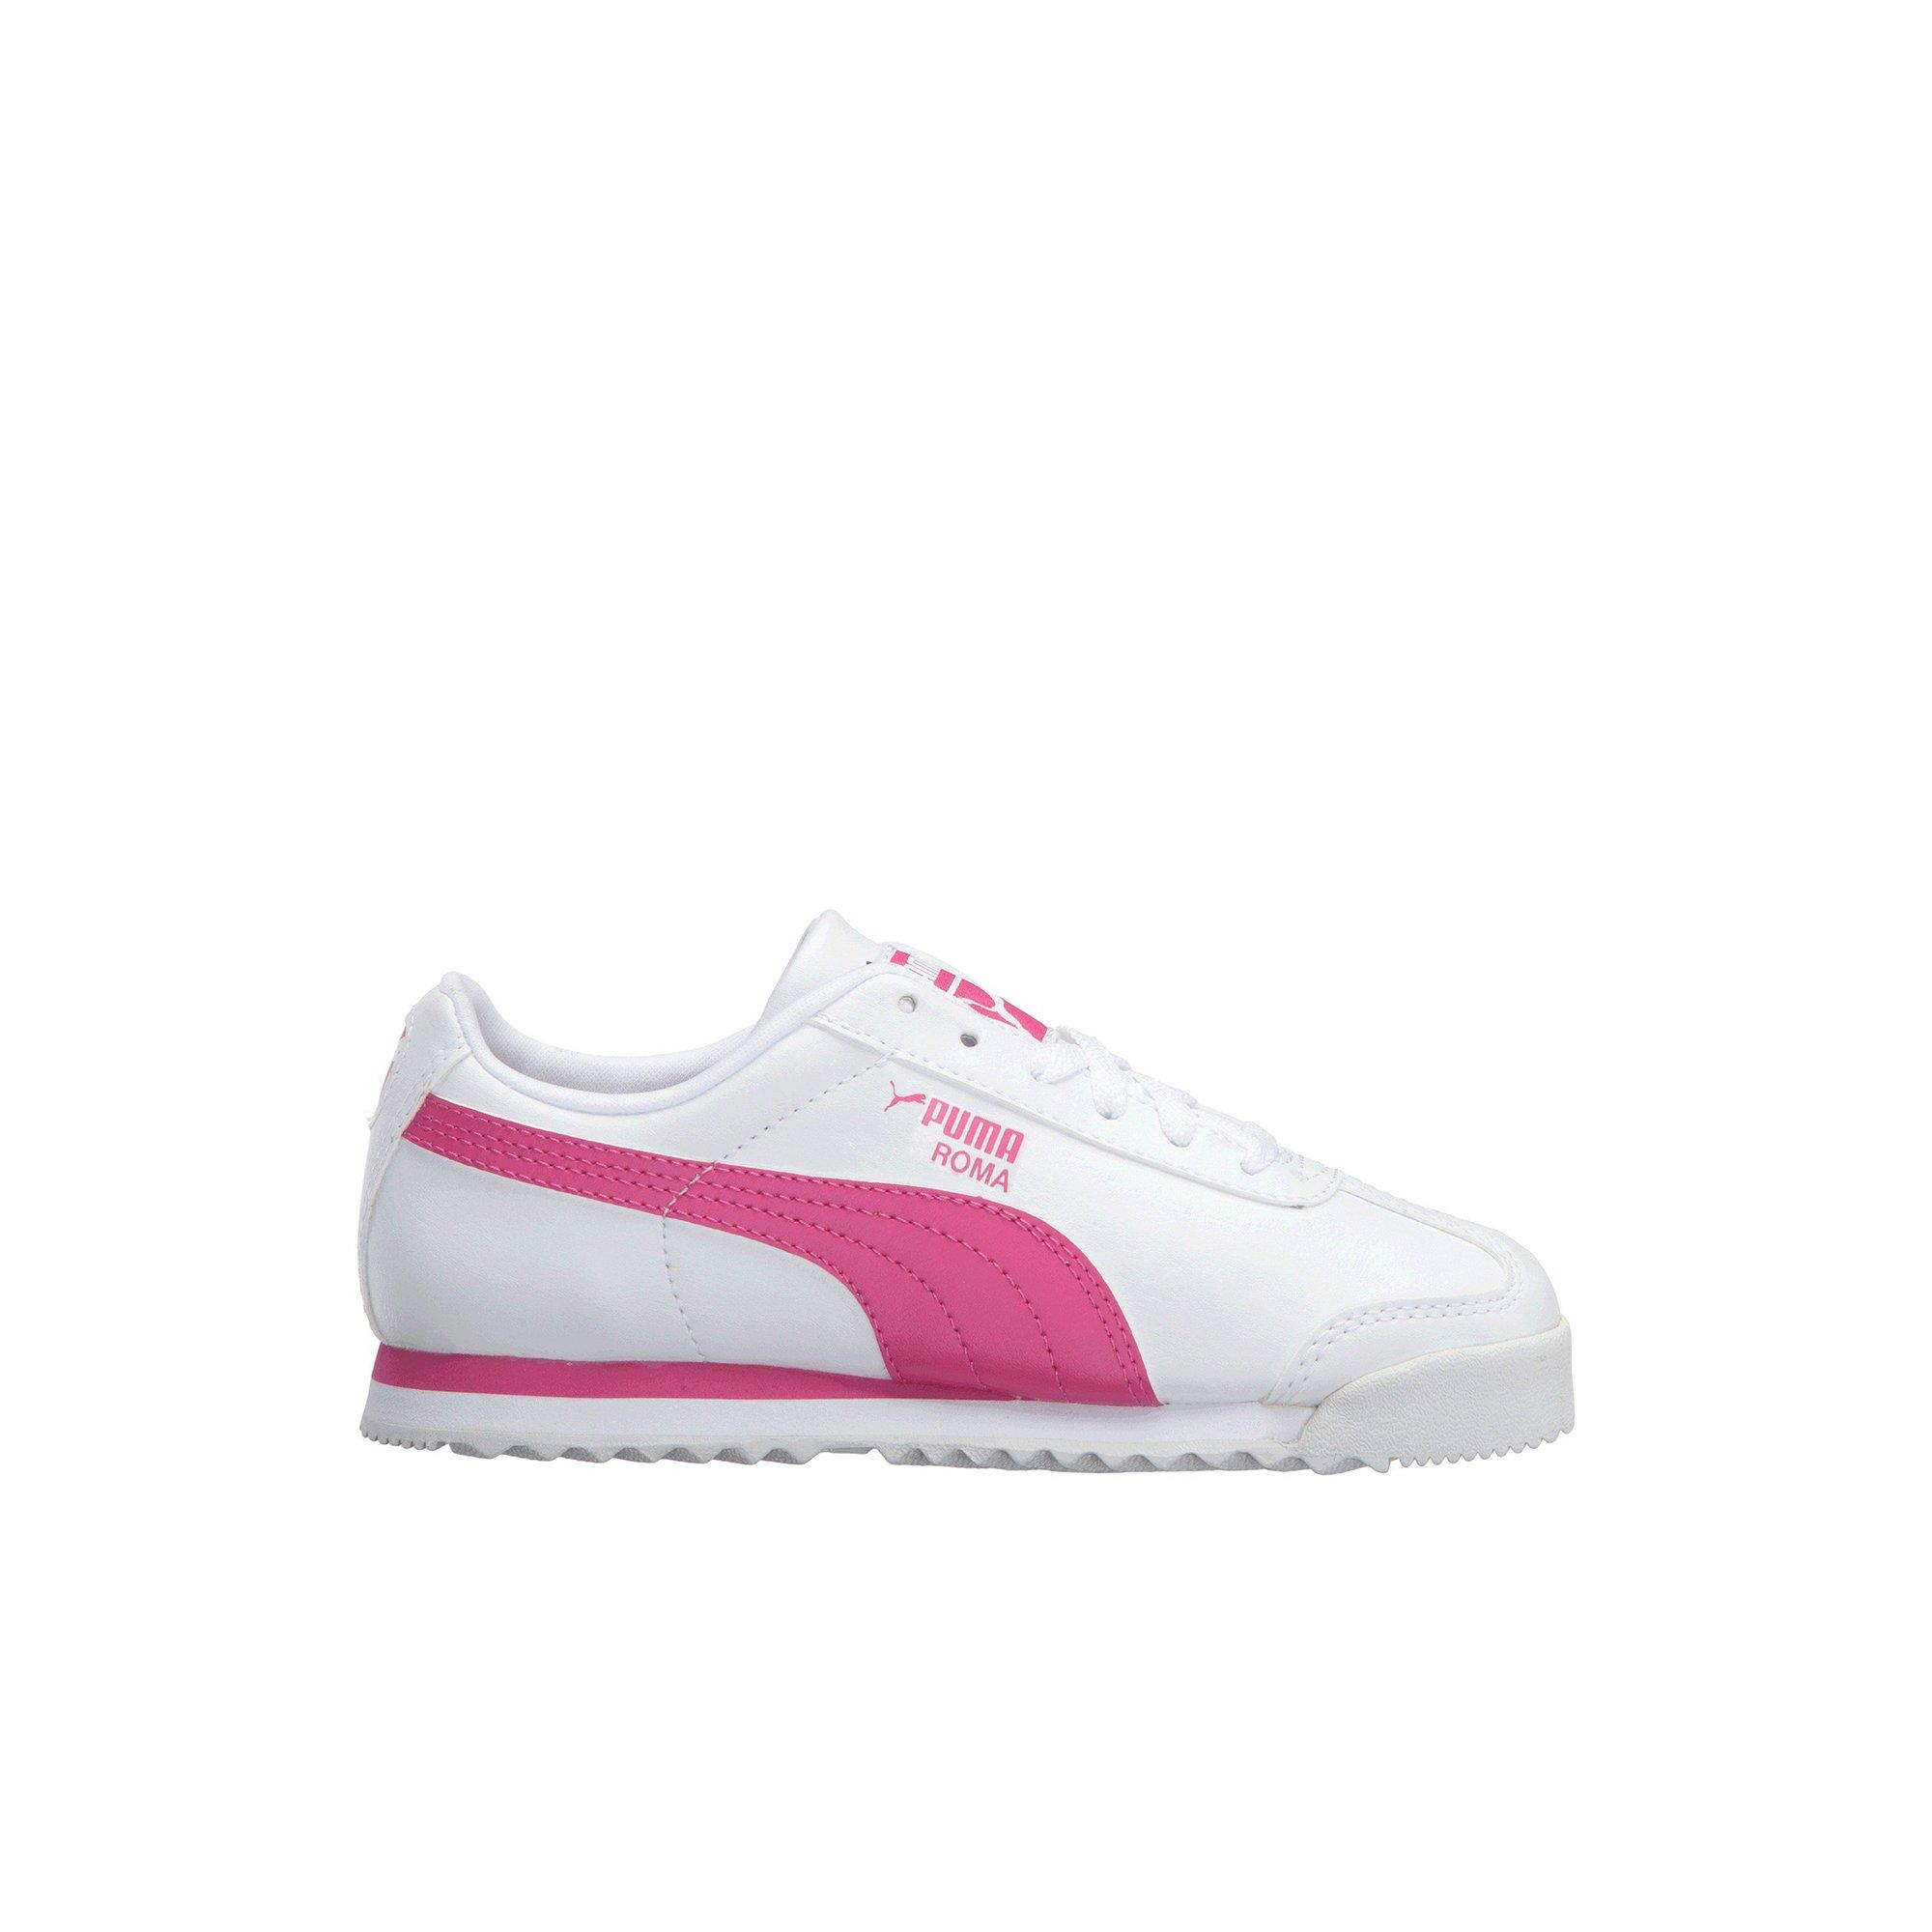 puma girl shoes pink